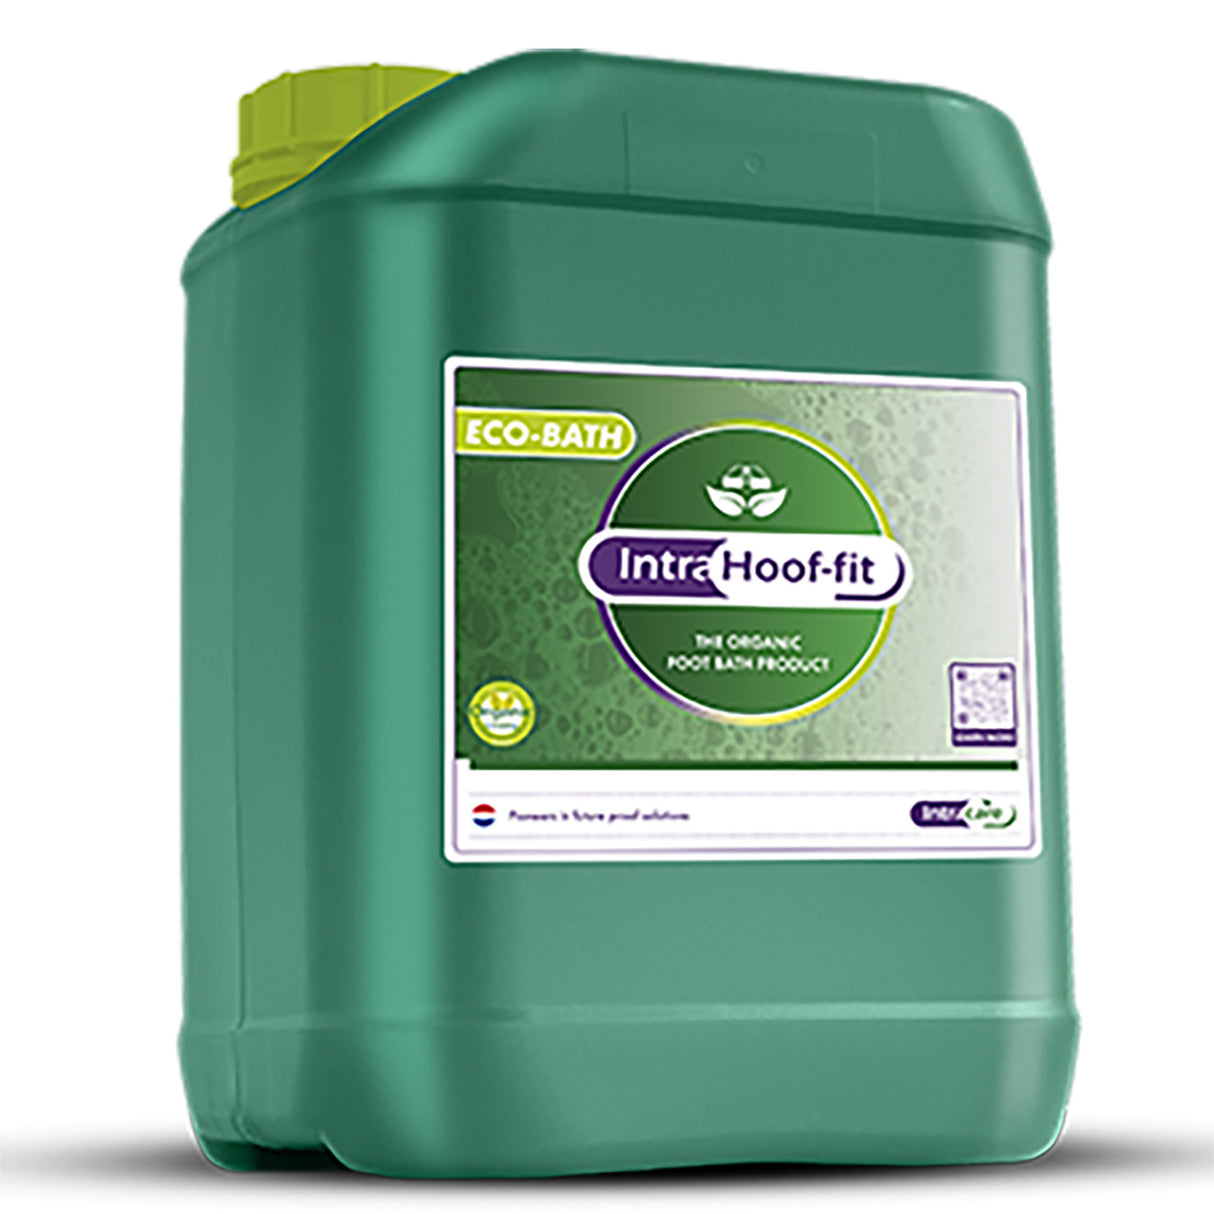 Intra Hoof-fit Eco-Bath 20 liters